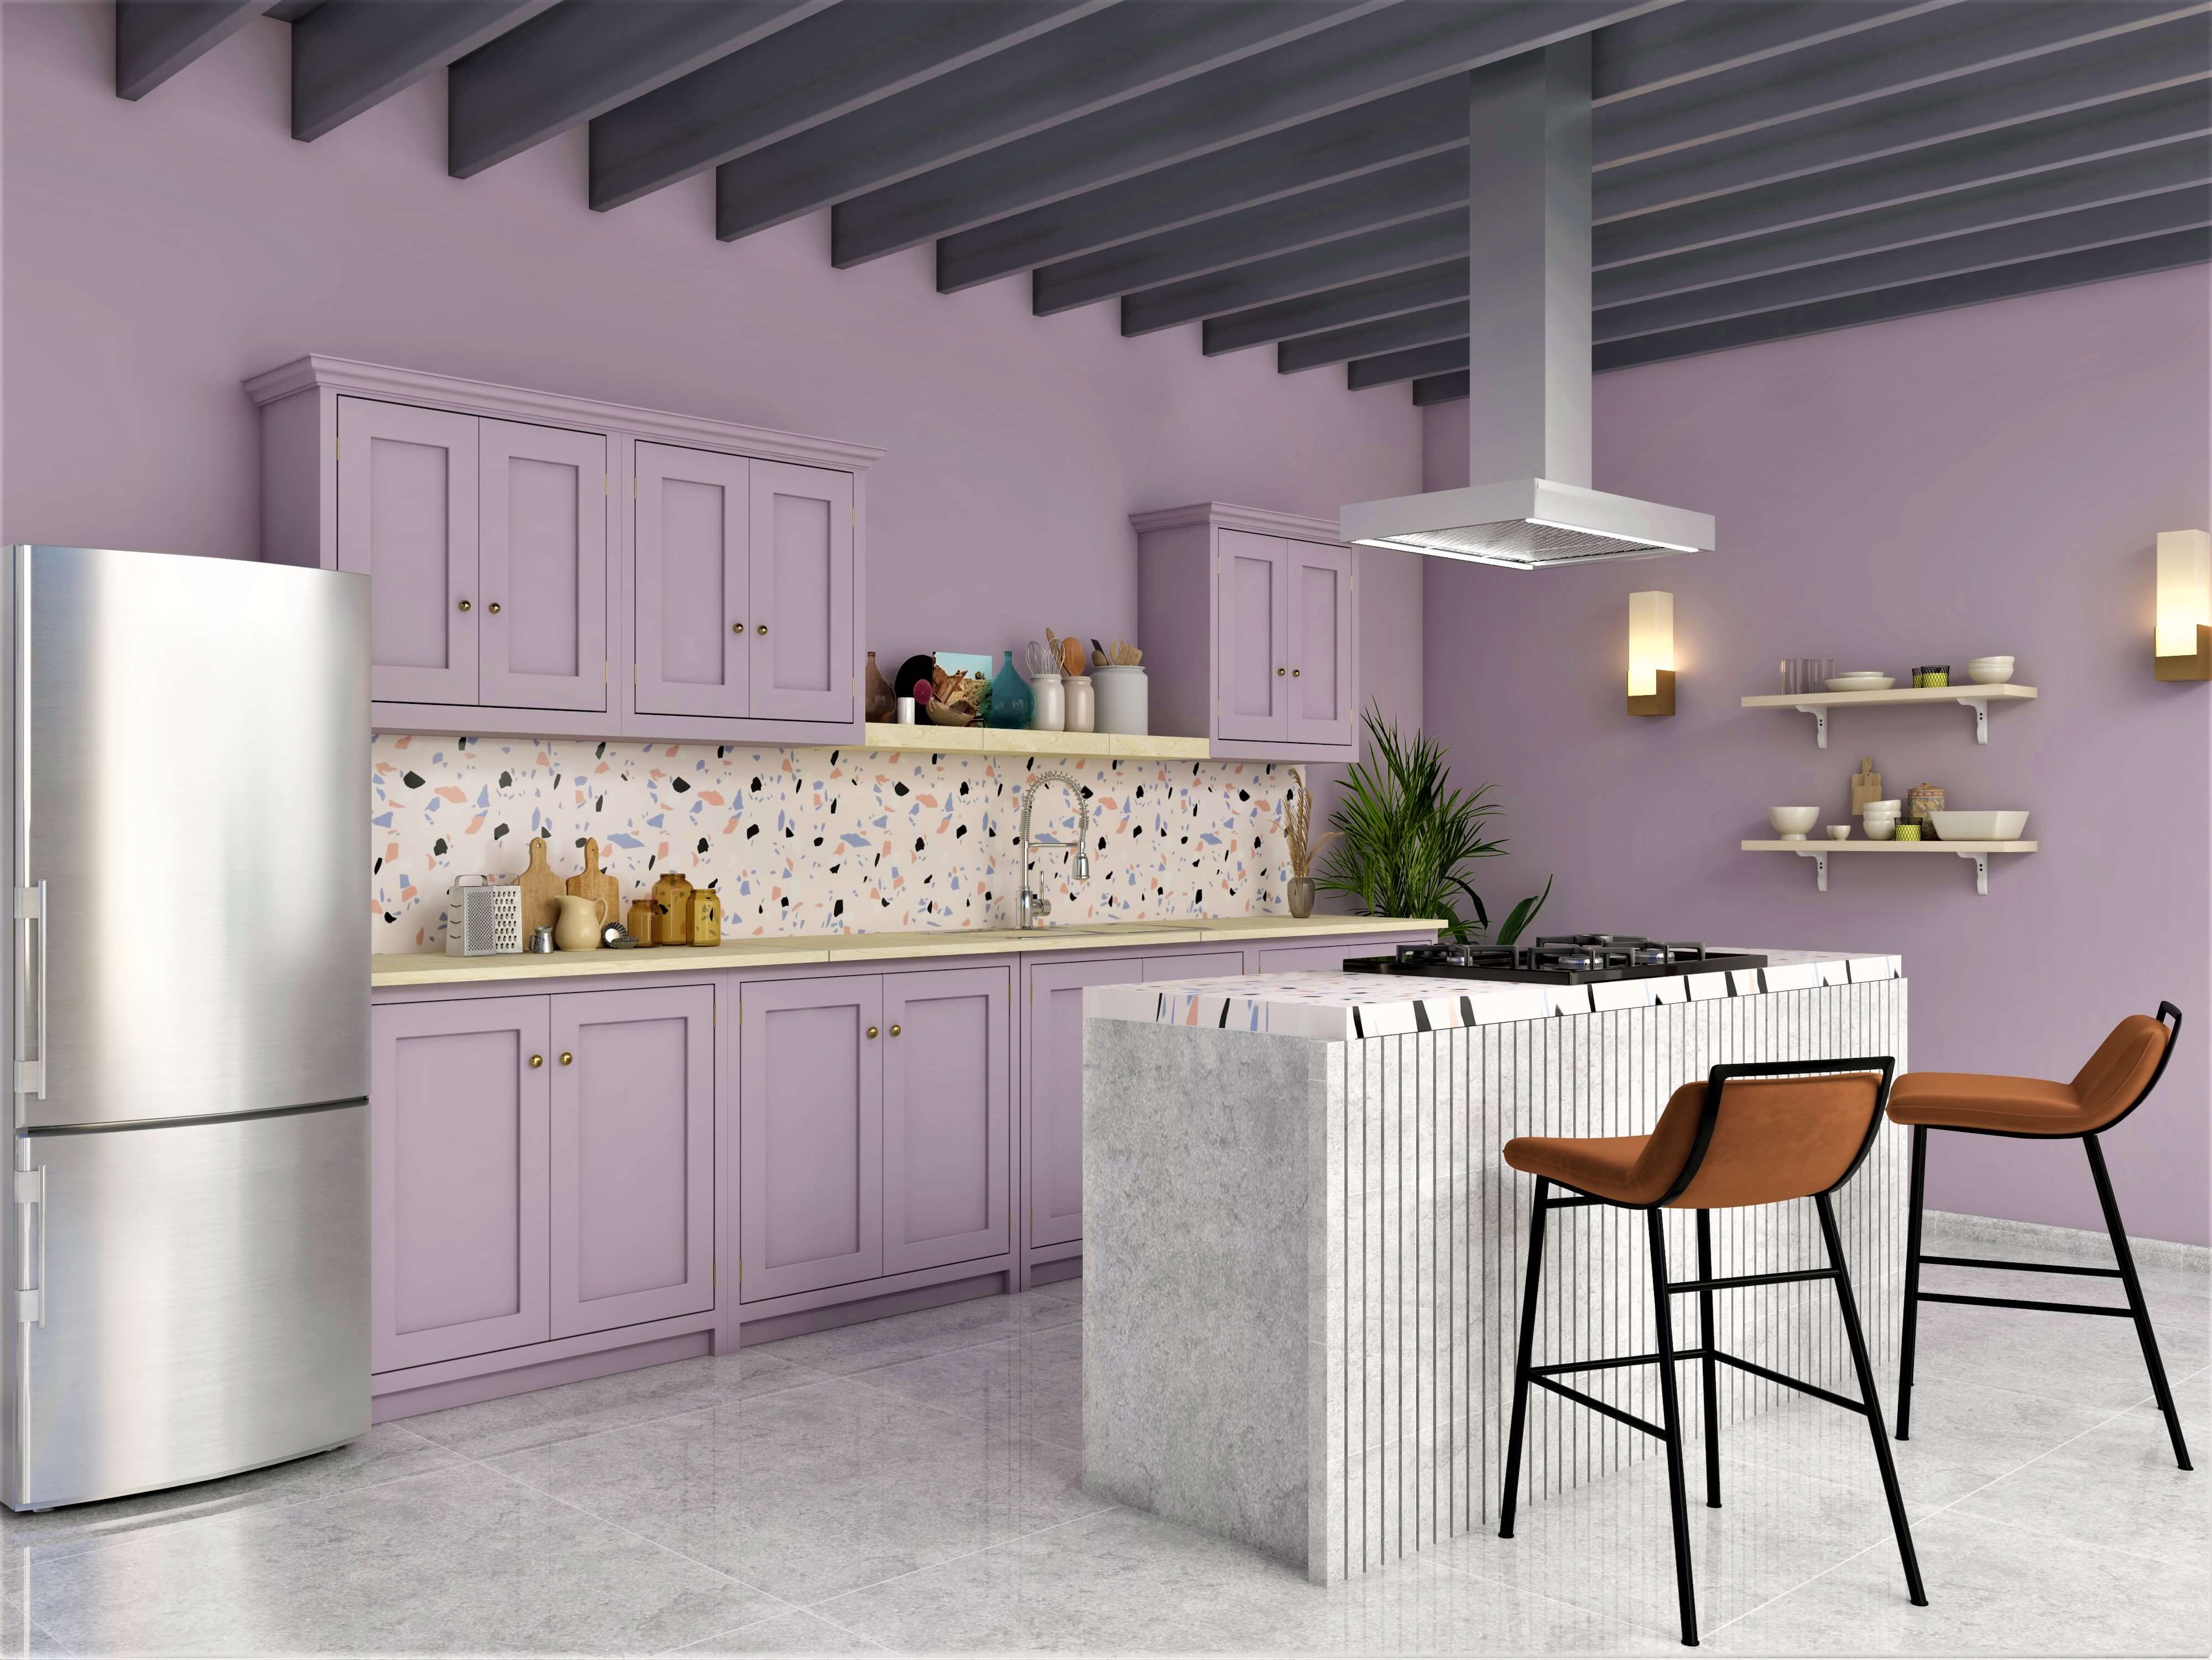 Simple open modular kitchen design idea to enhance your kitchen design - Beautiful Homes